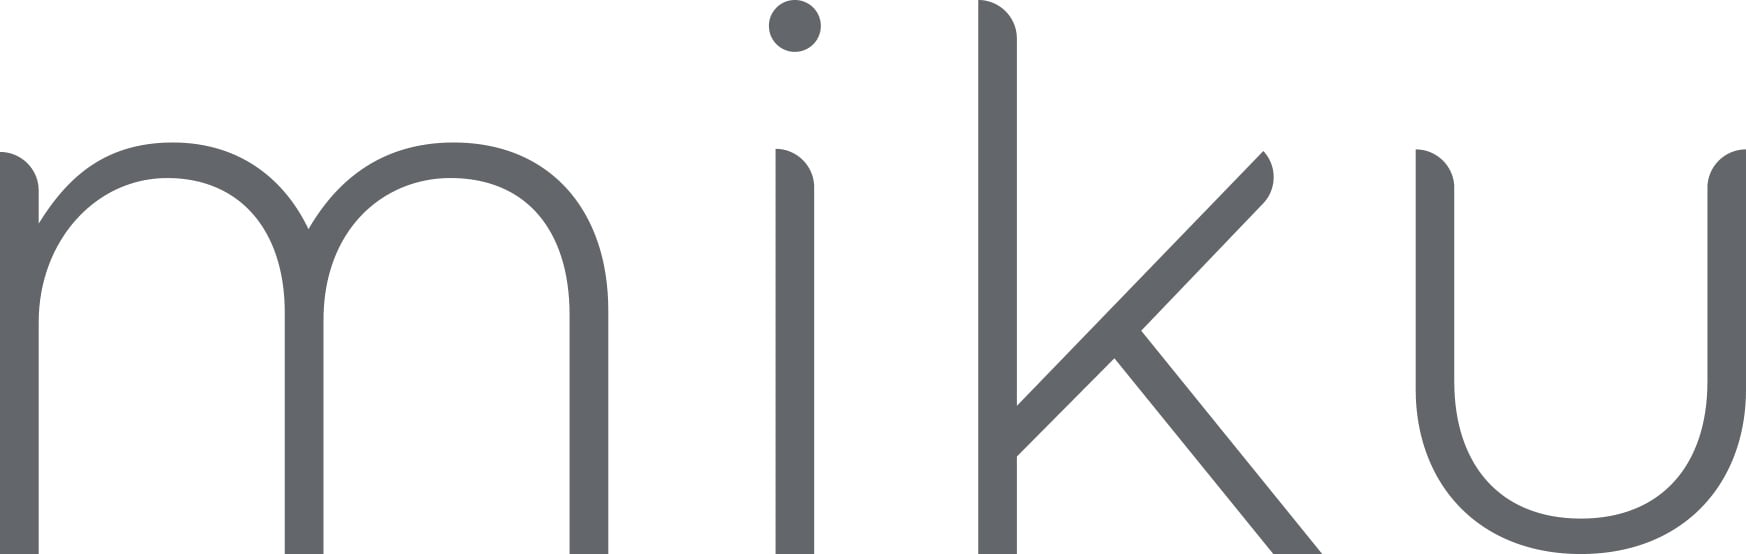 Miku, Inc.